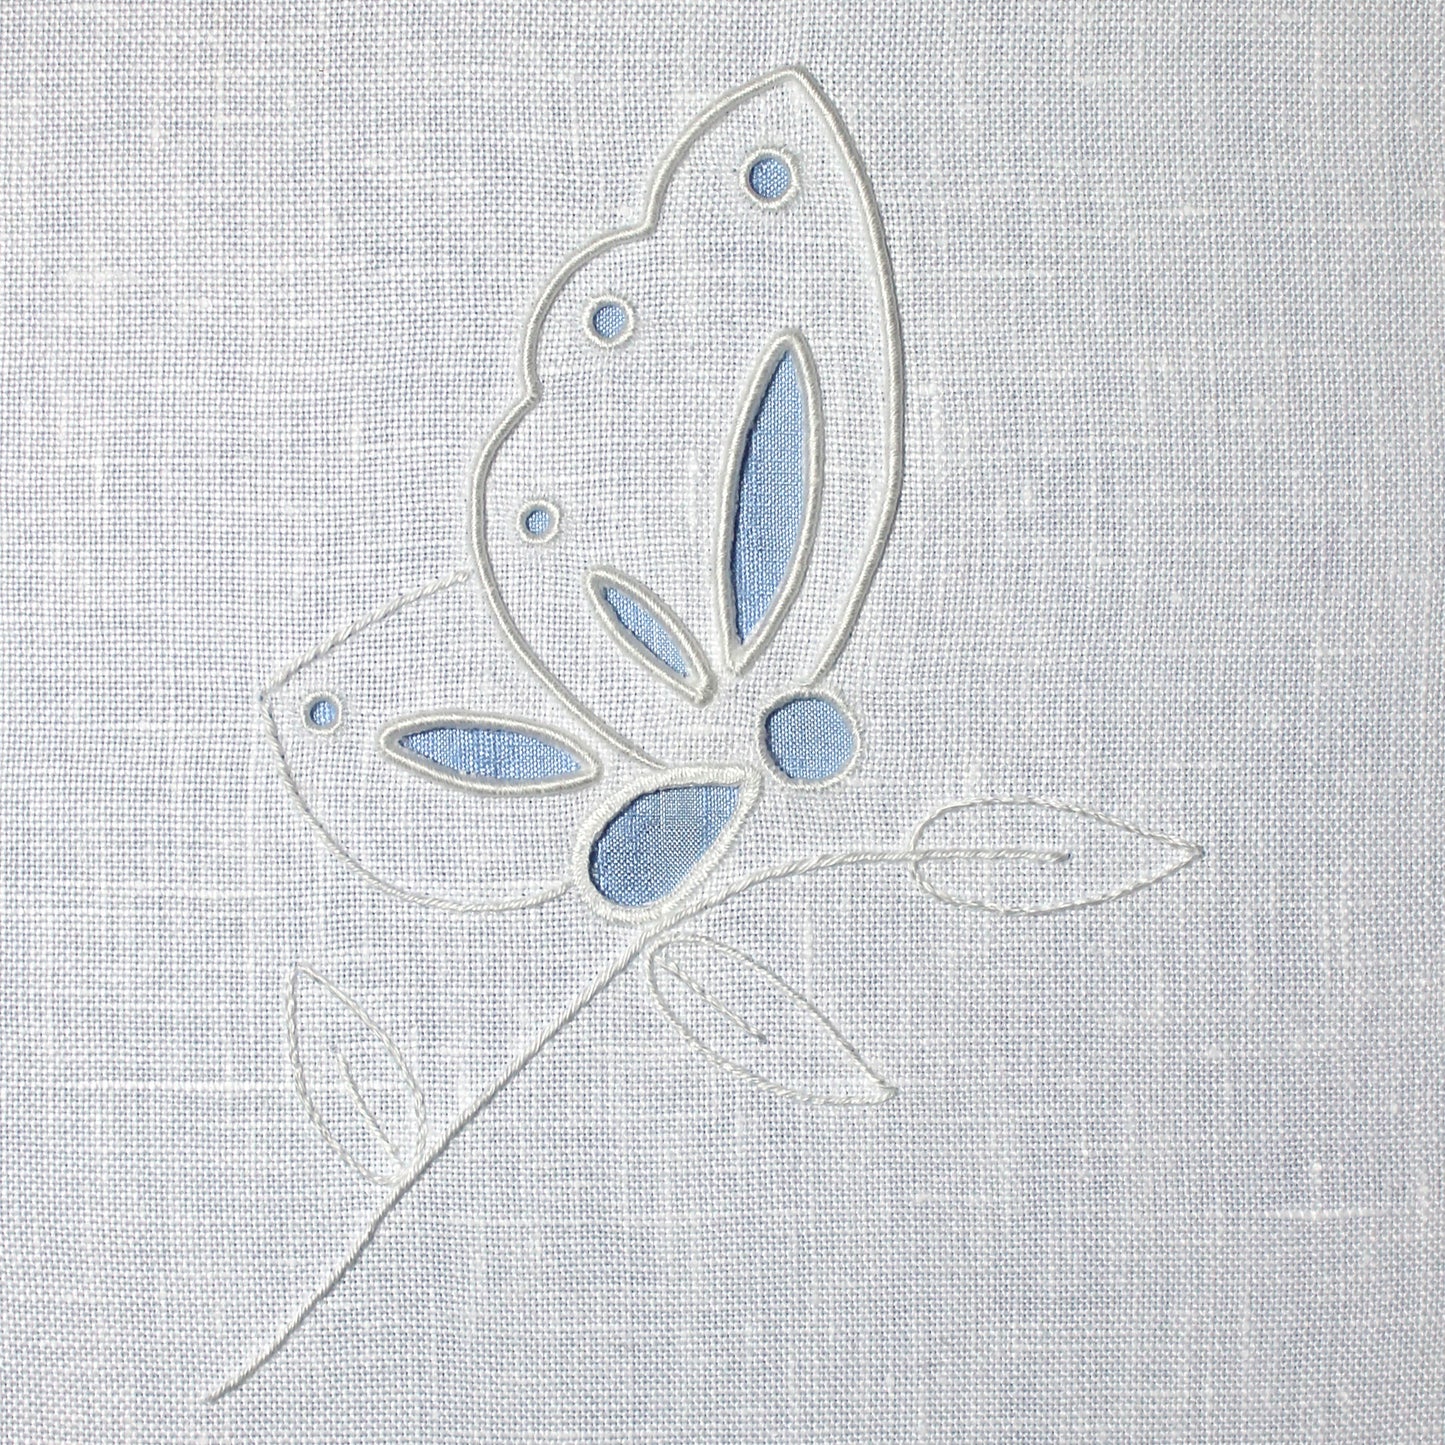 'Poised for Flight' Whitework Embroidery Kit